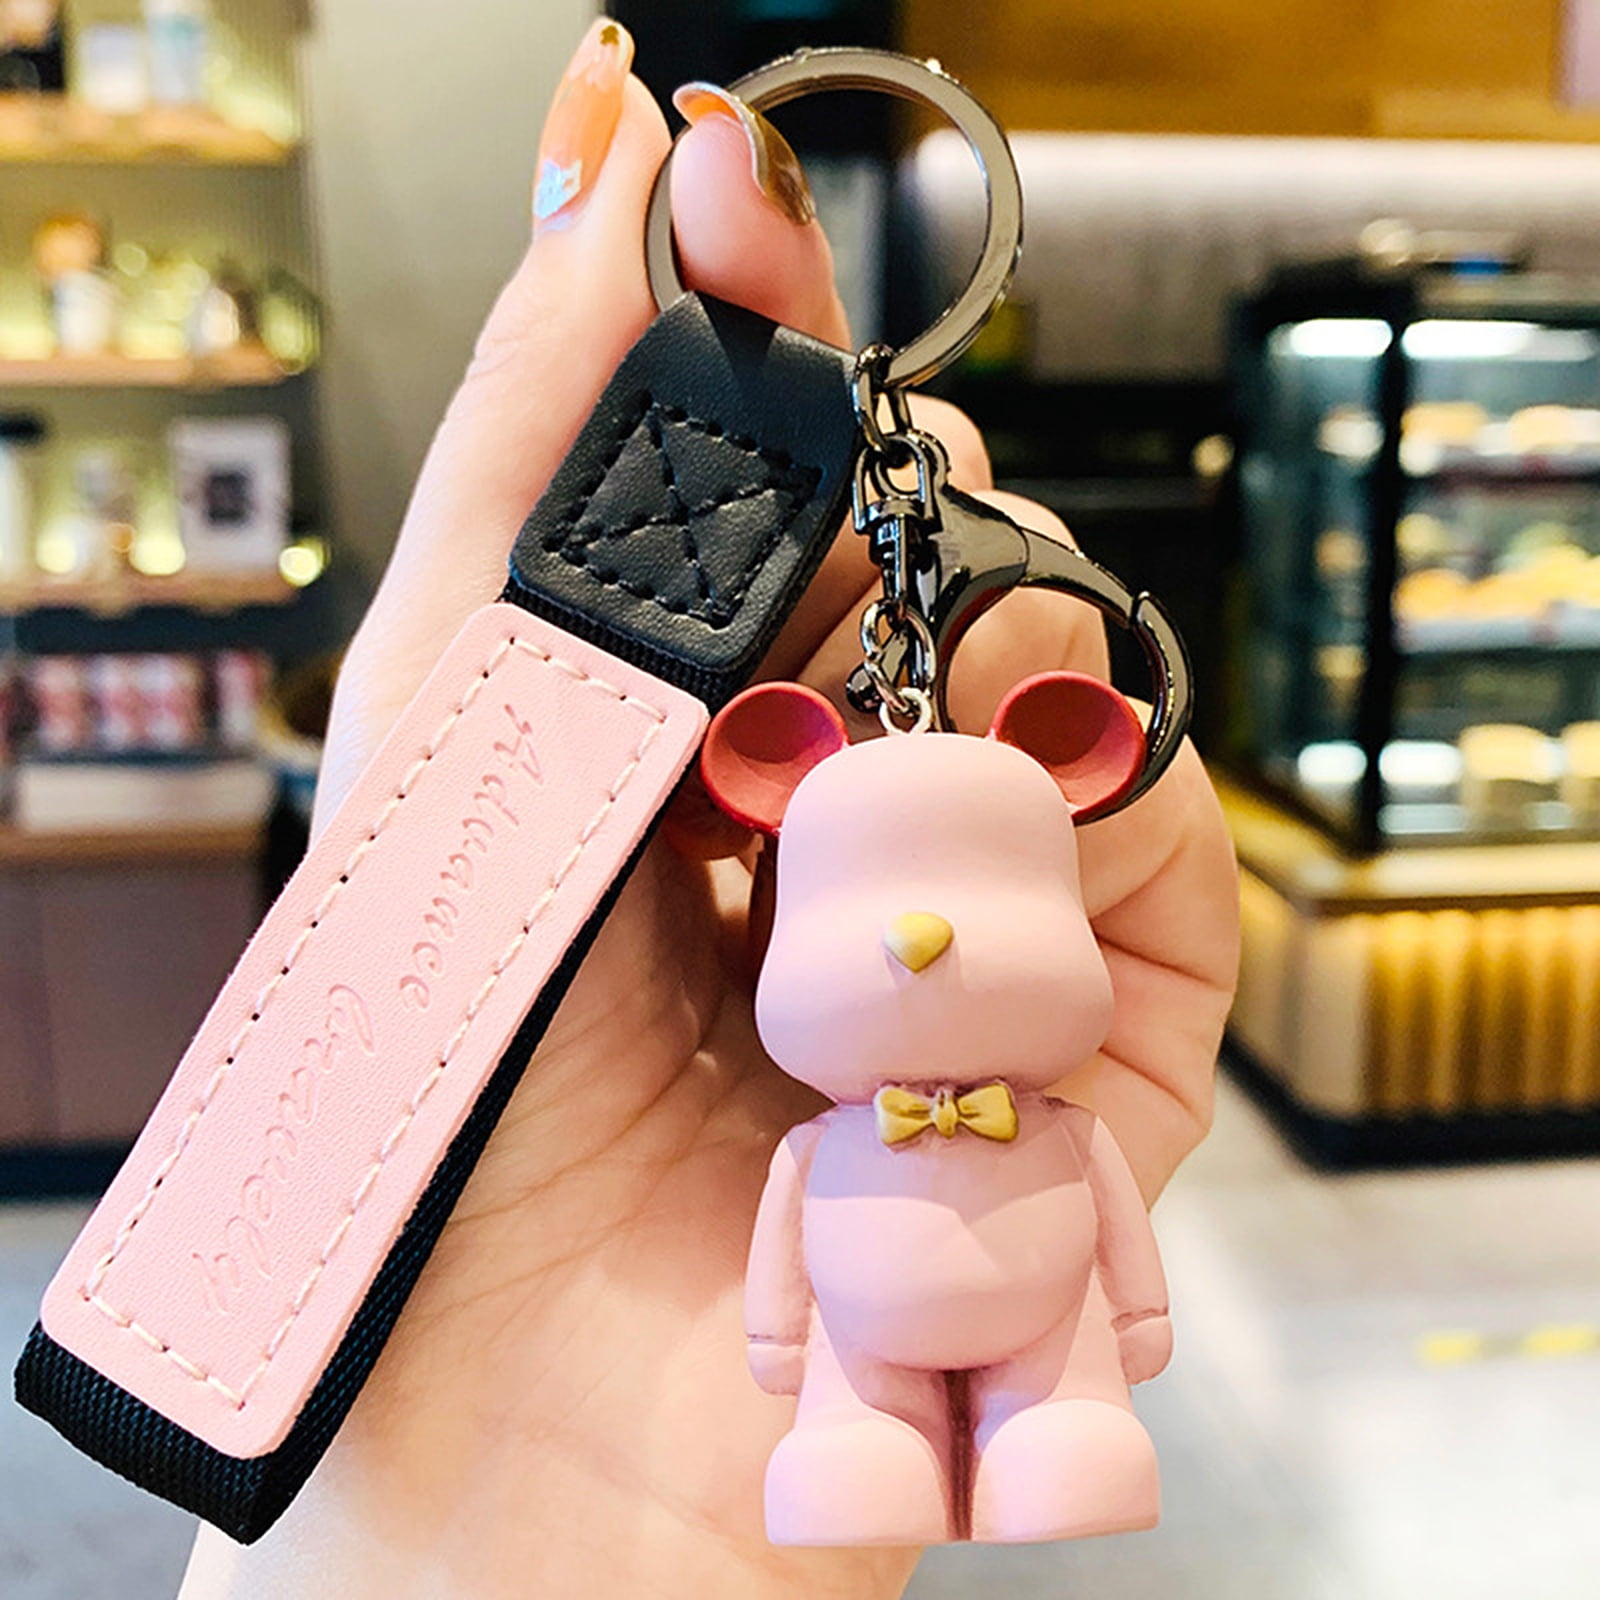 Nuolin Cute Leather Lady Girl Bear Keychain Animal Keychain Bag Charm  Pendant Jewelry Bulk